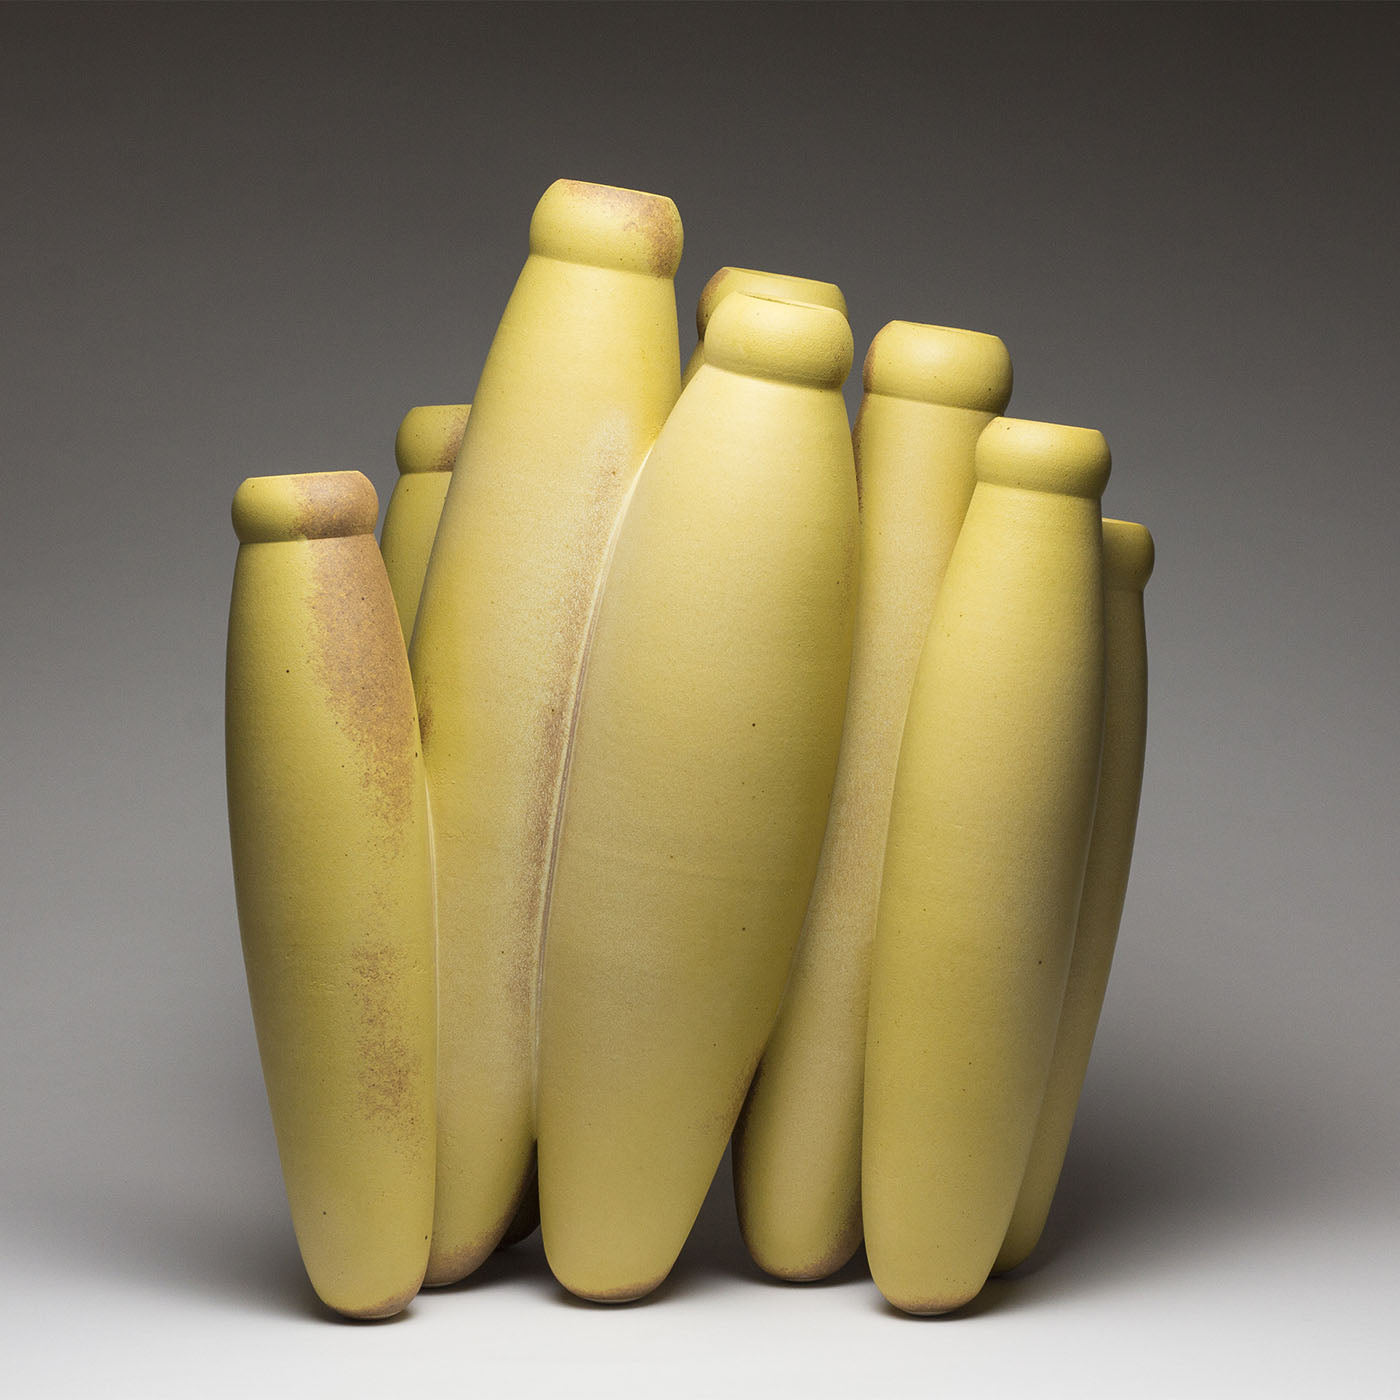 Cluster Yellow Vase #2 - Alternative view 1